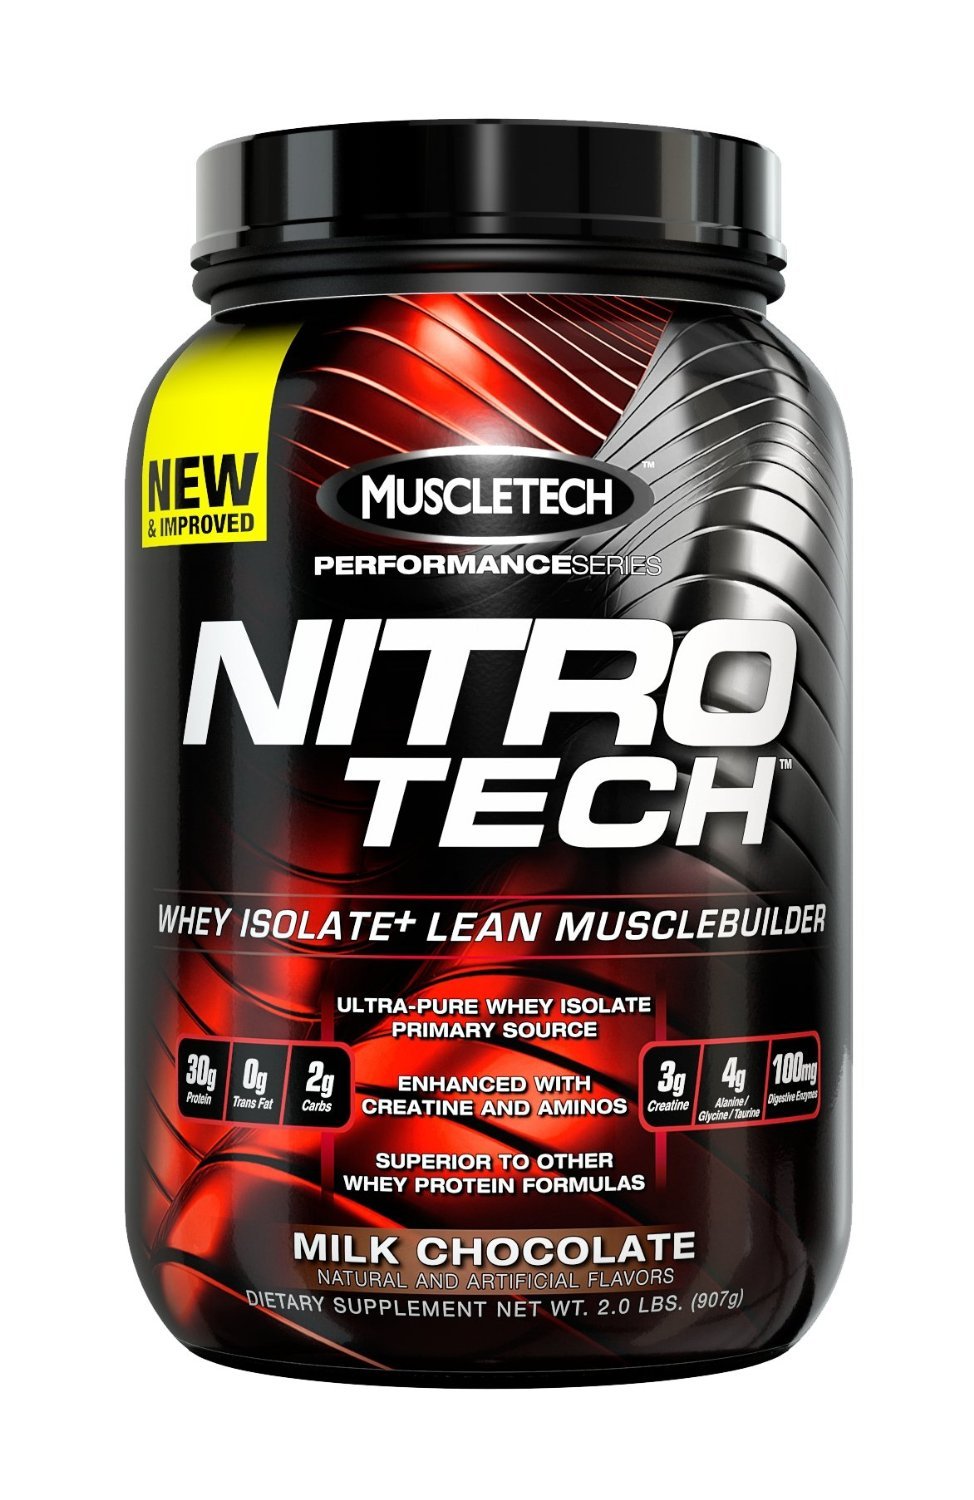 Nitro Tech Performance Series, 907 g, MuscleTech. Whey Isolate. Lean muscle mass Weight Loss स्वास्थ्य लाभ Anti-catabolic properties 